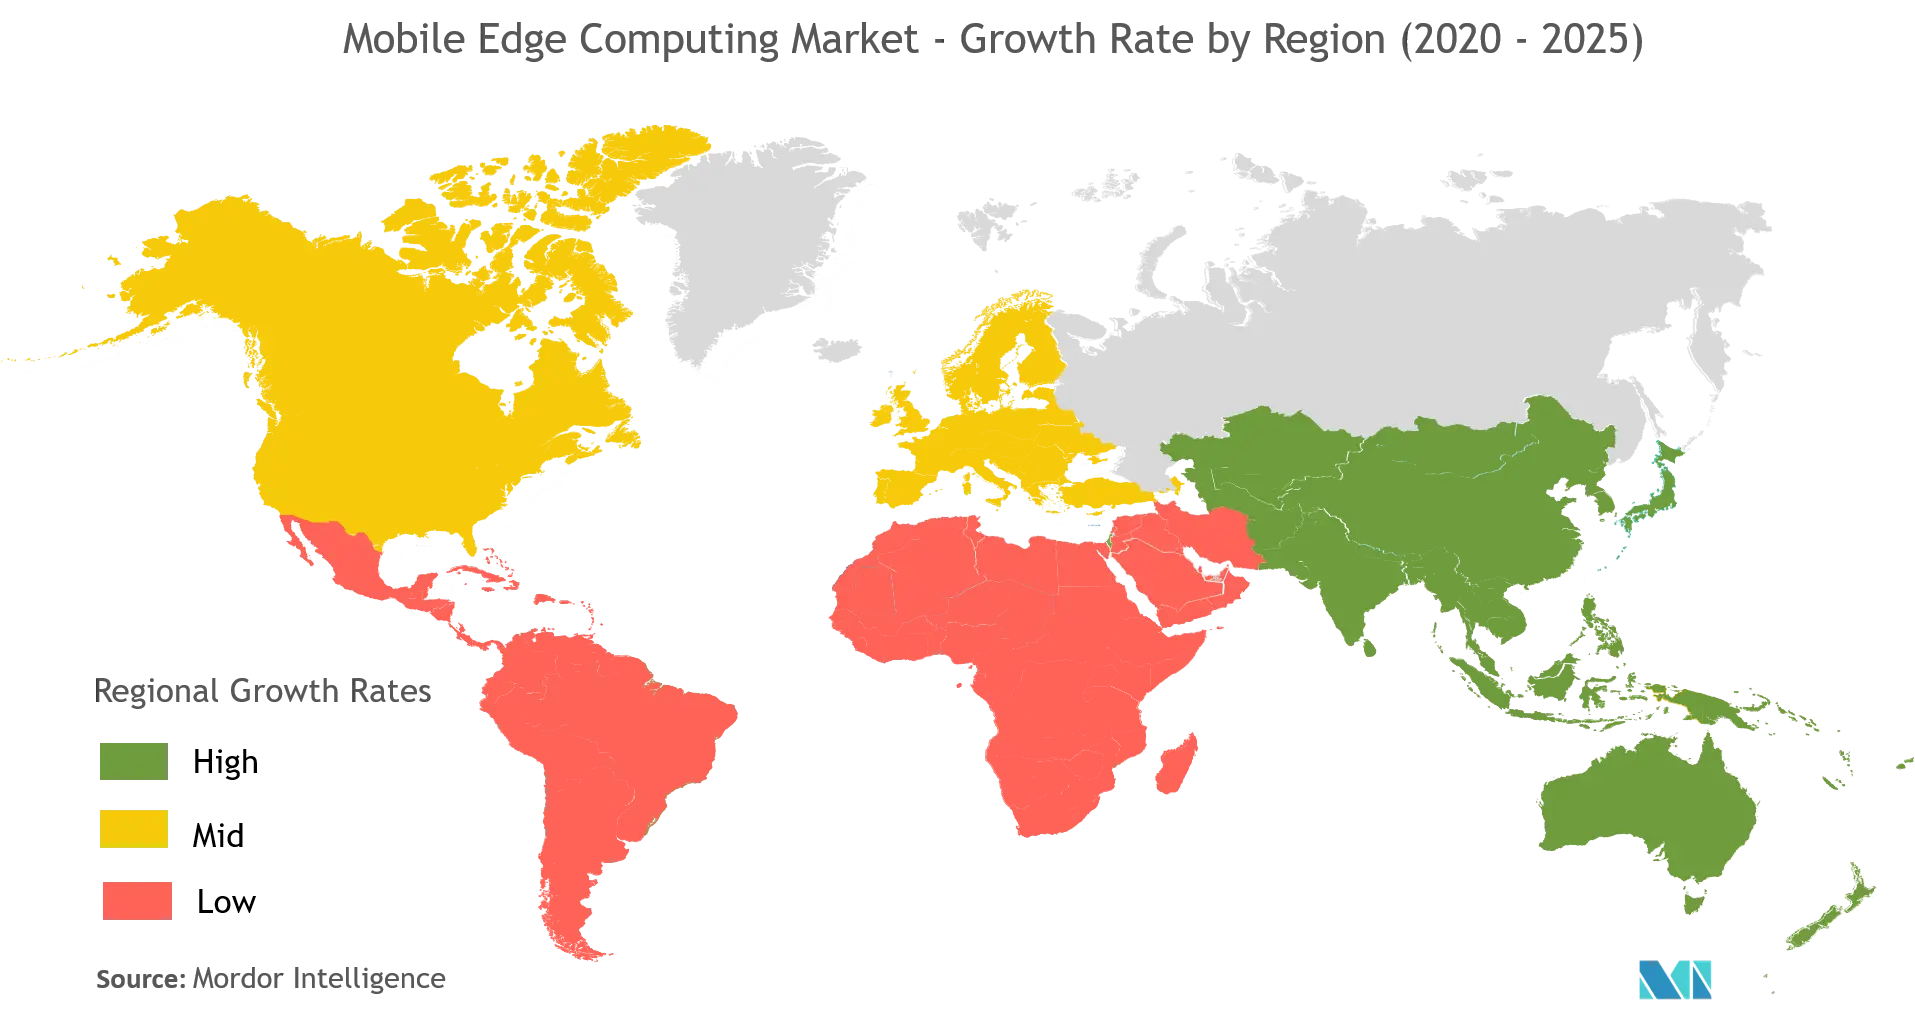 mobile edge computing market size	